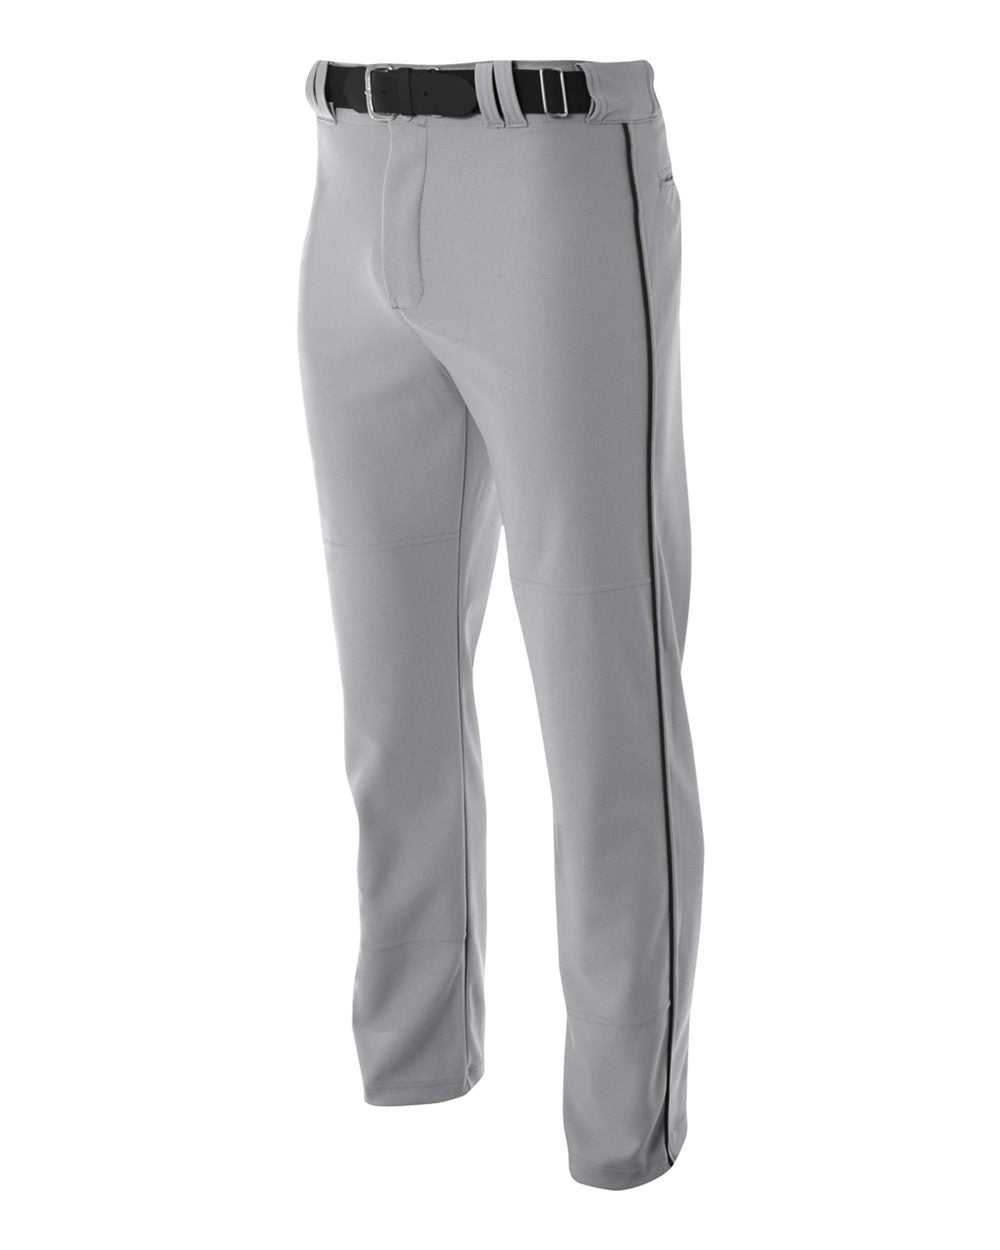 A4 N6162 Pro Style Open Bottom Baggy Cut Baseball Pant - Gray Black - HIT a Double